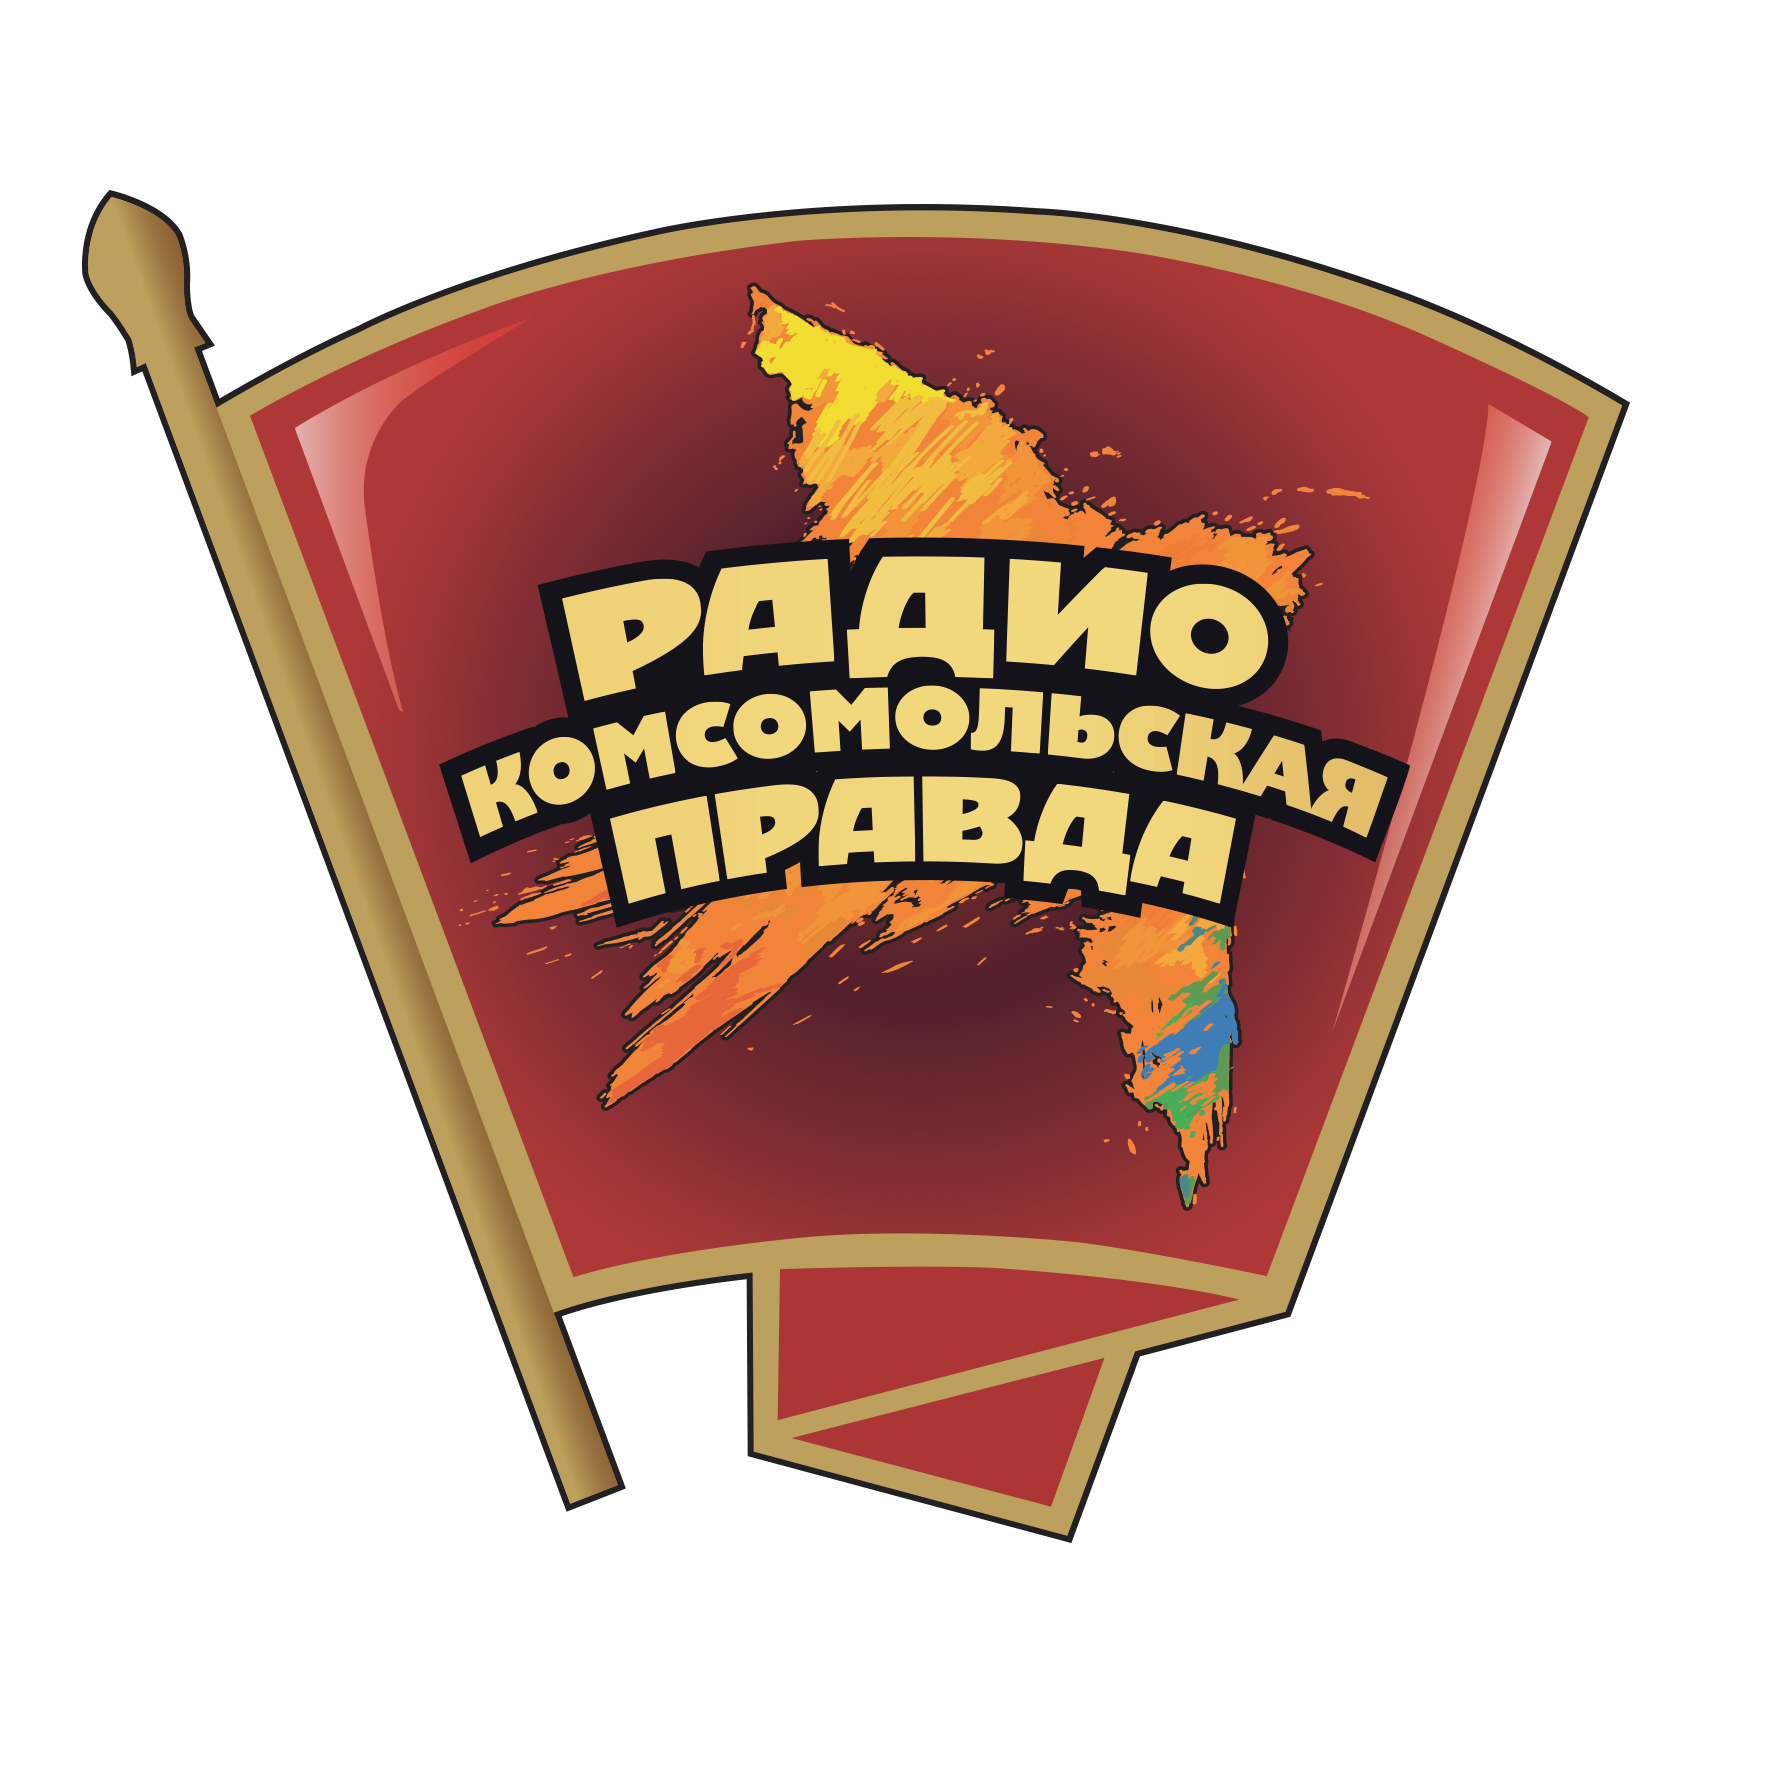 На фото - логотип радио Комсомольская правда